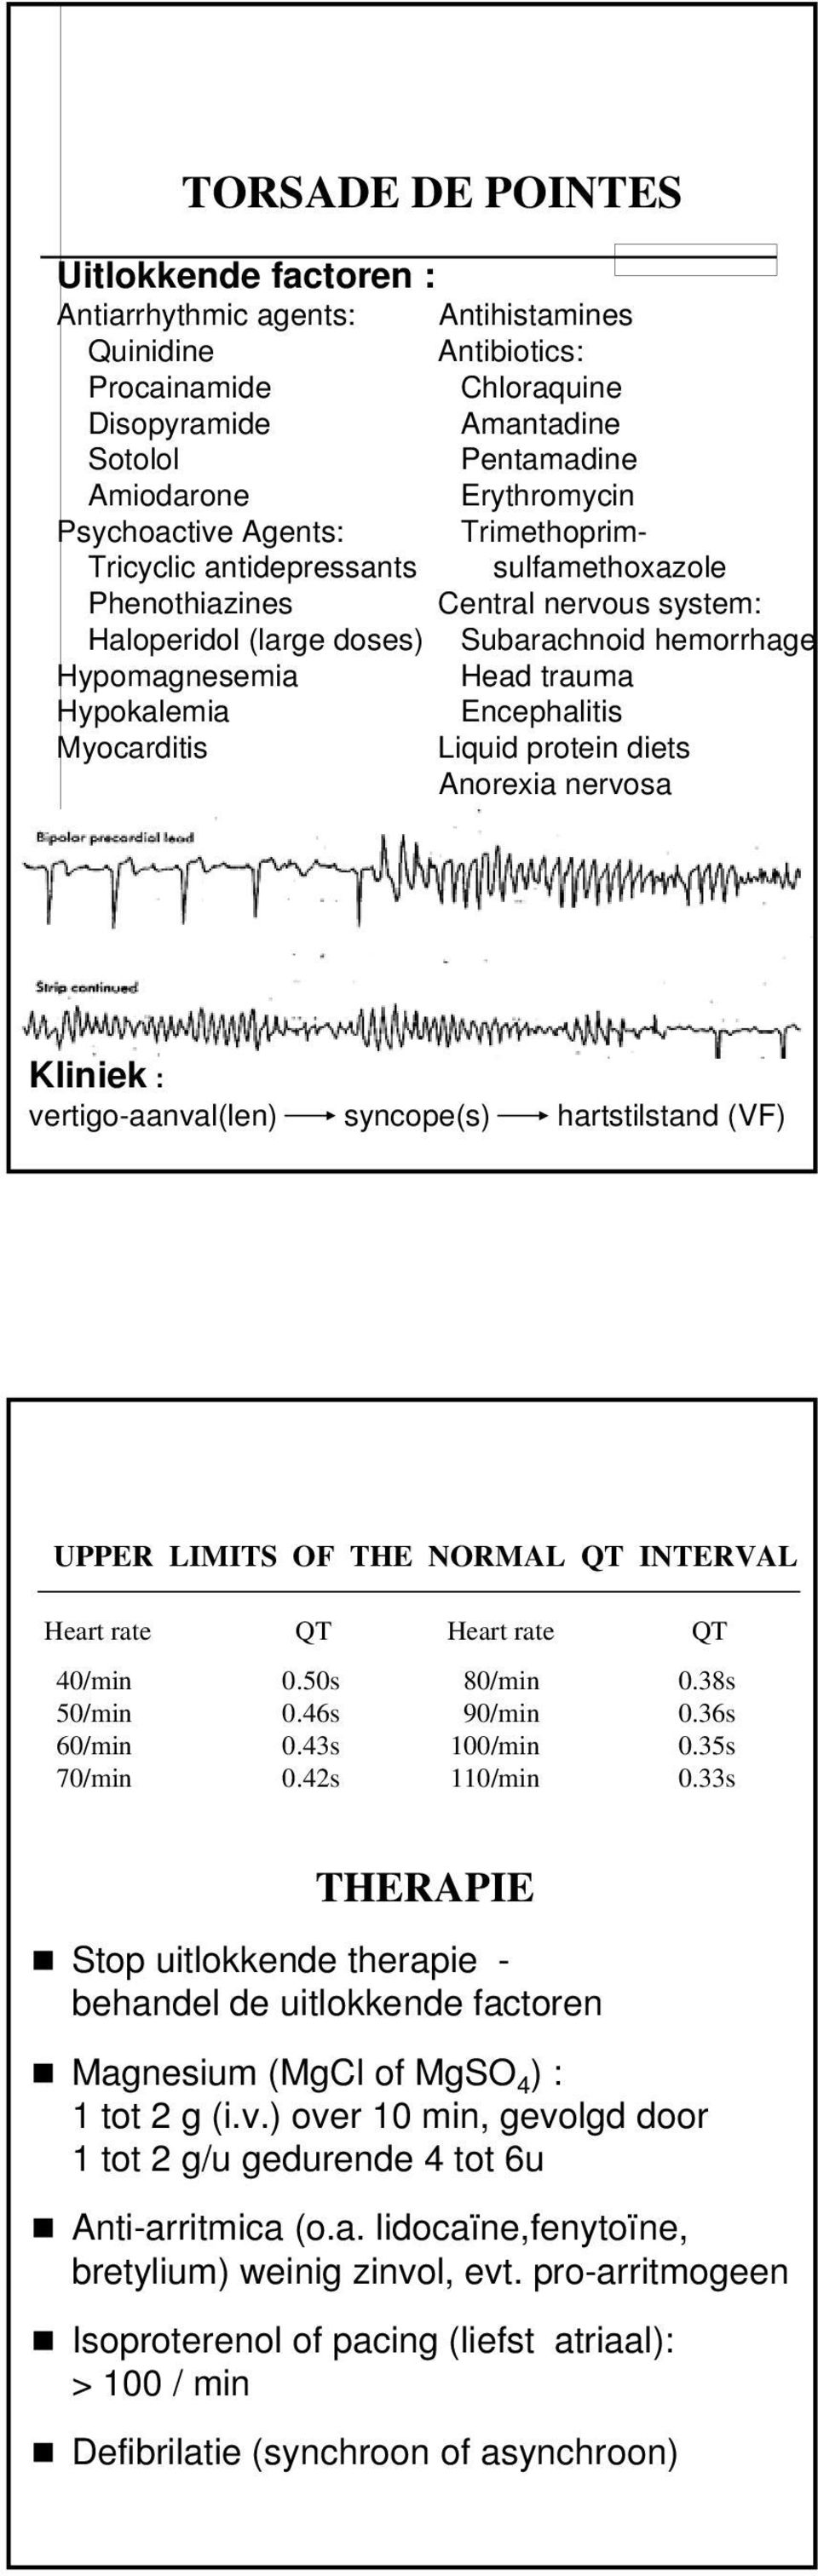 Hypokalemia Encephalitis Myocarditis Liquid protein diets Anorexia nervosa Kliniek : vertigo-aanval(len) syncope(s) hartstilstand (VF) UPPER LIMITS OF THE NORMAL QT INTERVAL Heart rate QT Heart rate